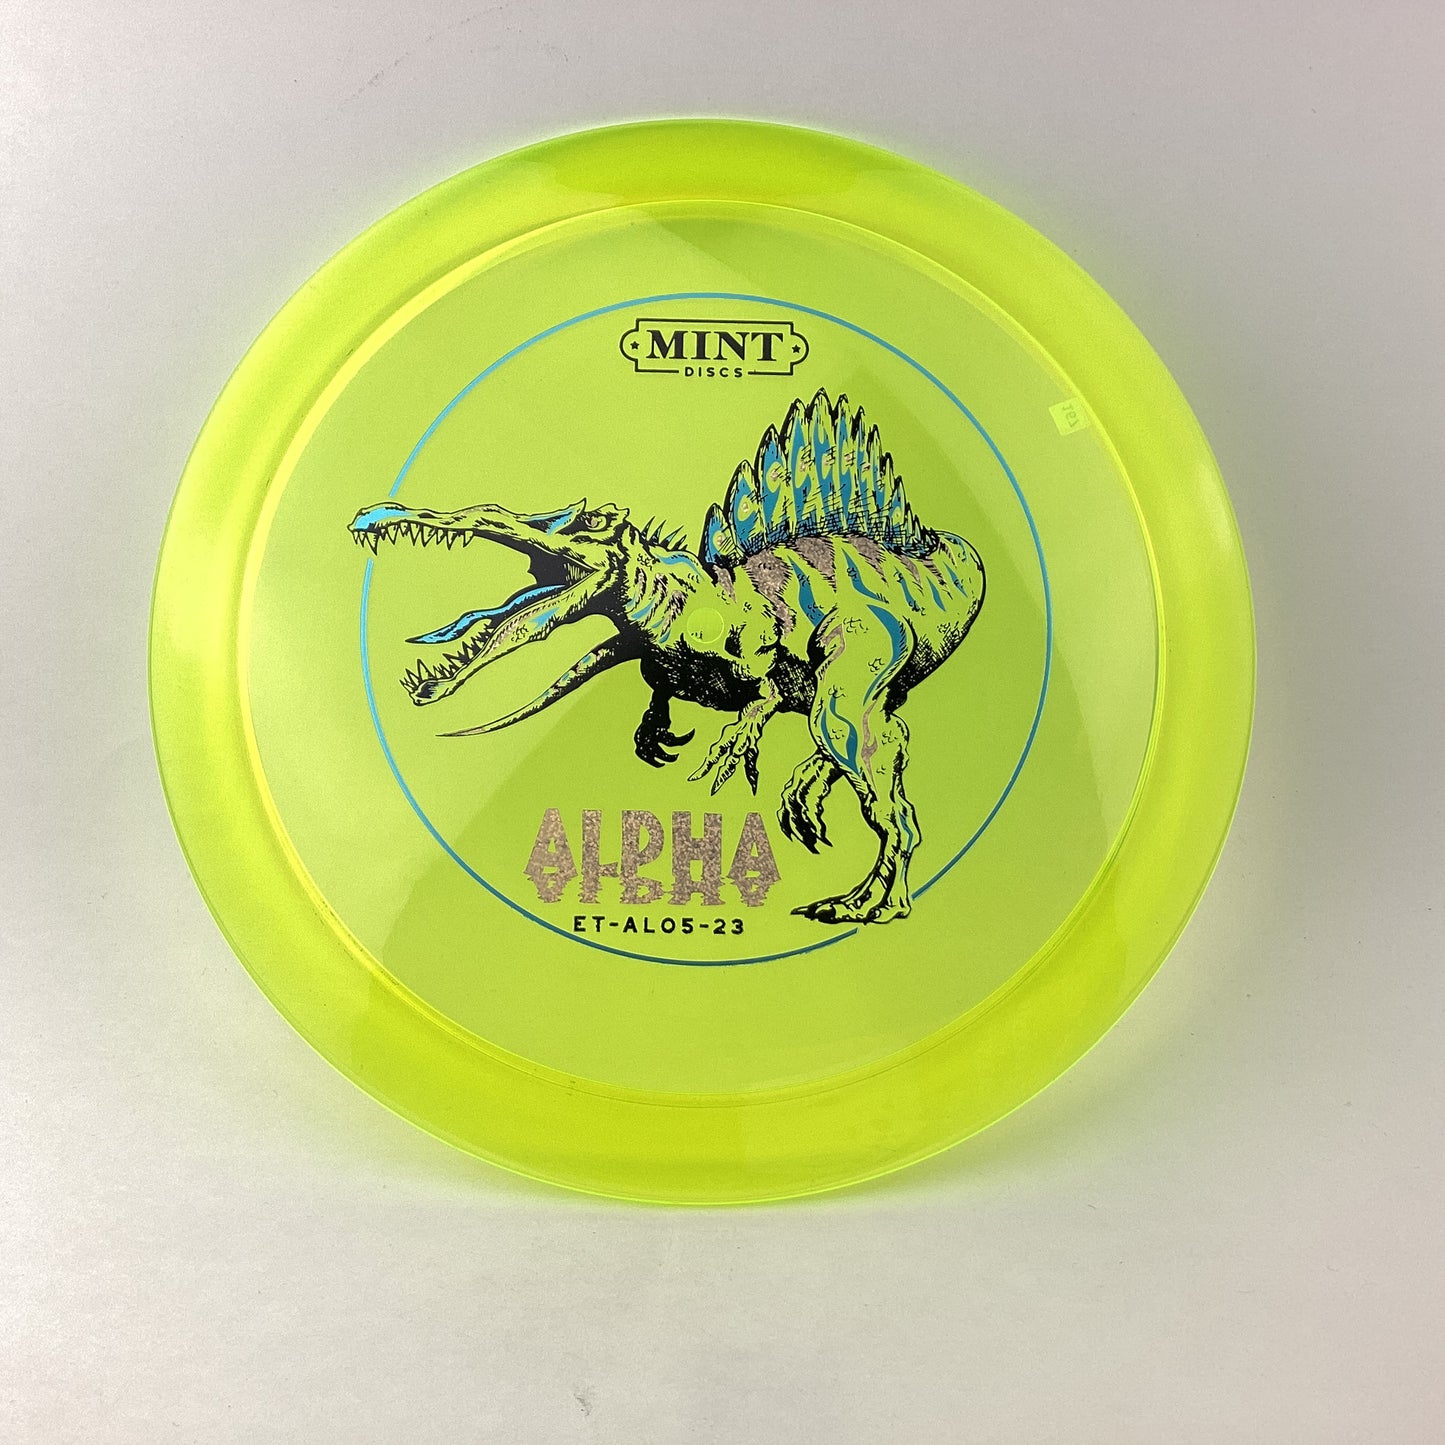 Mint Discs Eternal Alpha - Spin-O-Saurus Stamp